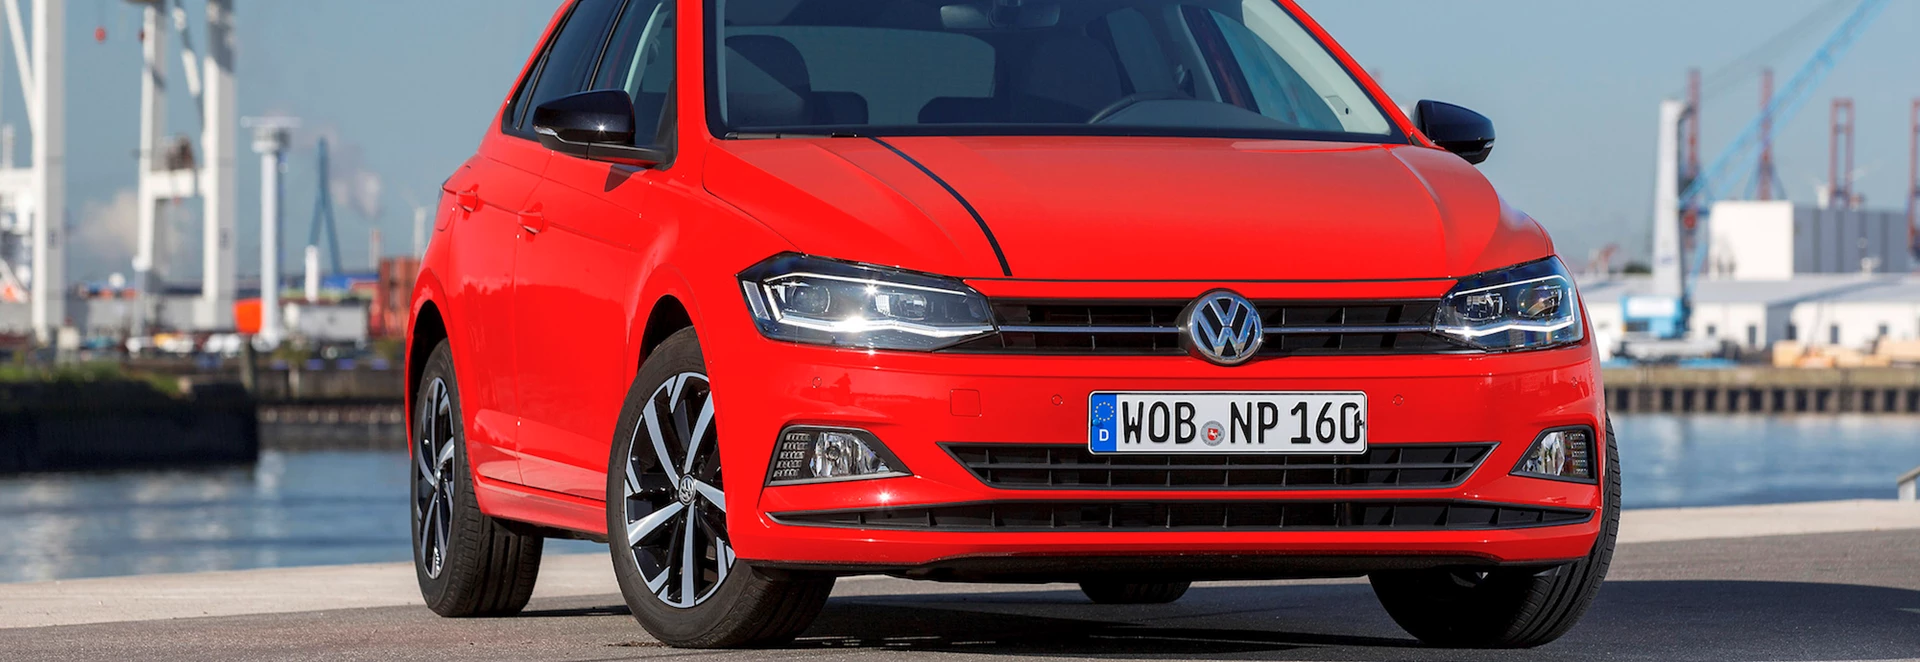 2017 Volkswagen Polo joins scrappage scheme line-up 